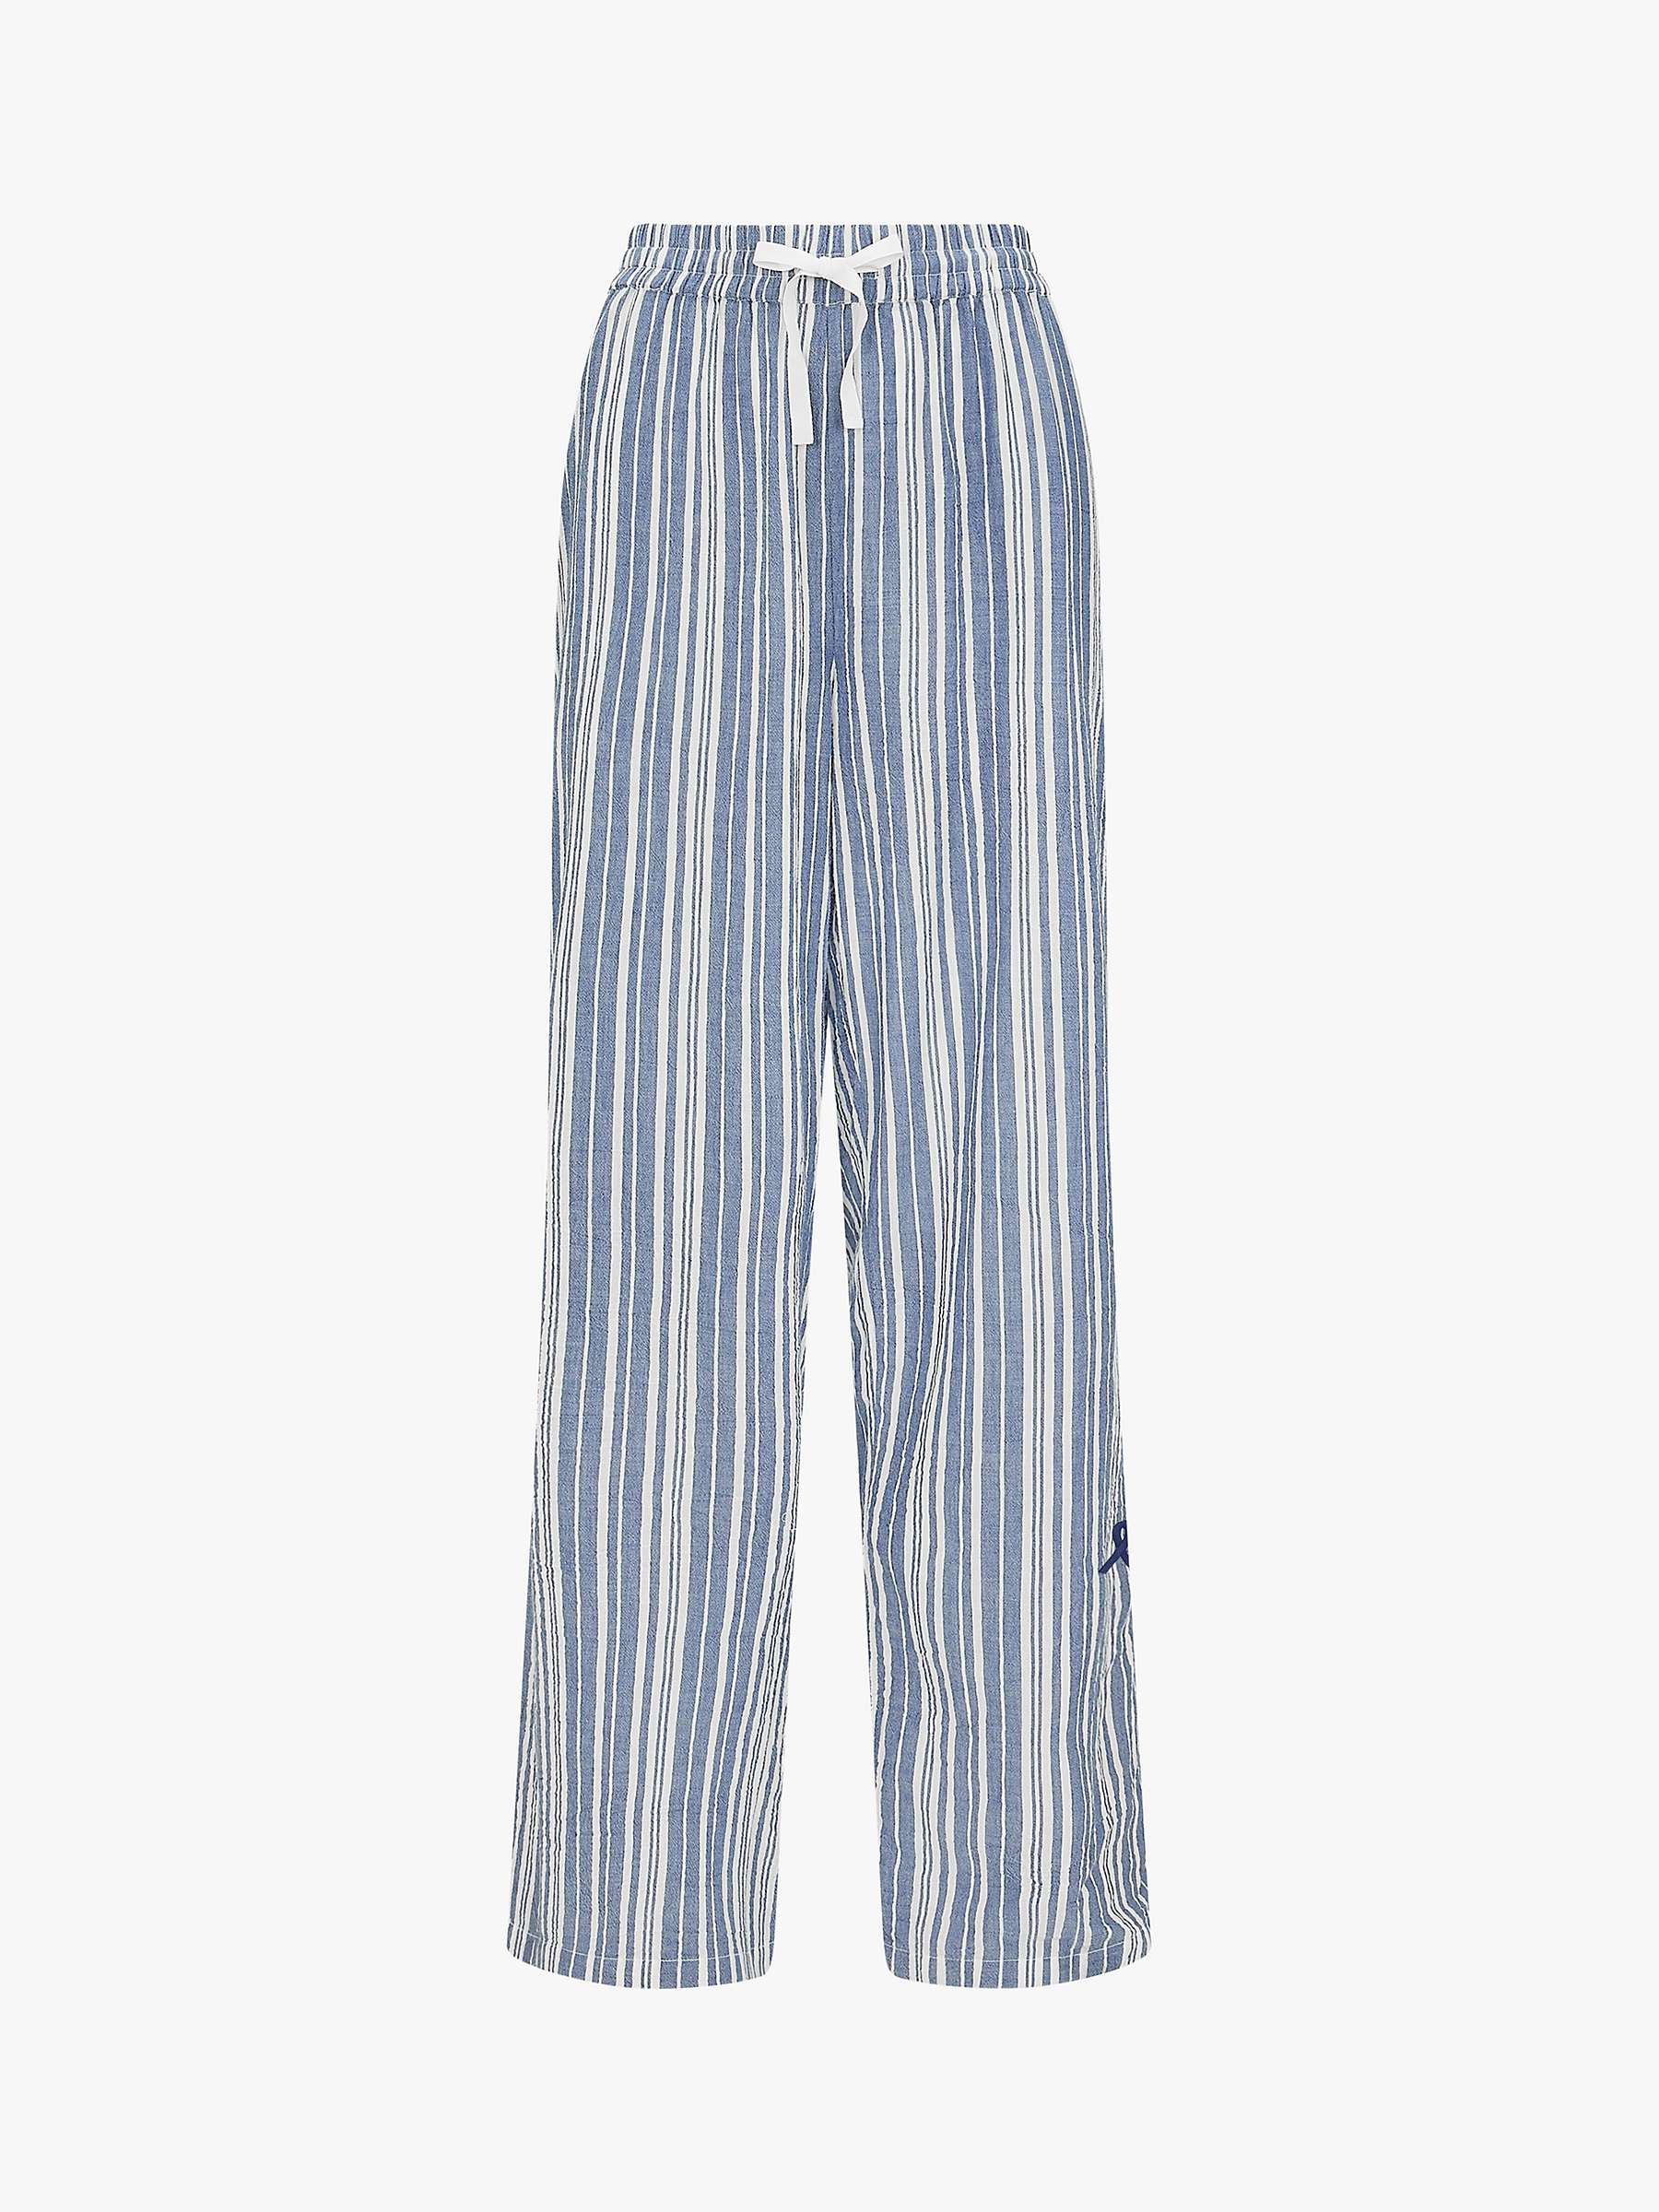 Buy Nudea The PJ Trouser Pyjama Bottoms Online at johnlewis.com